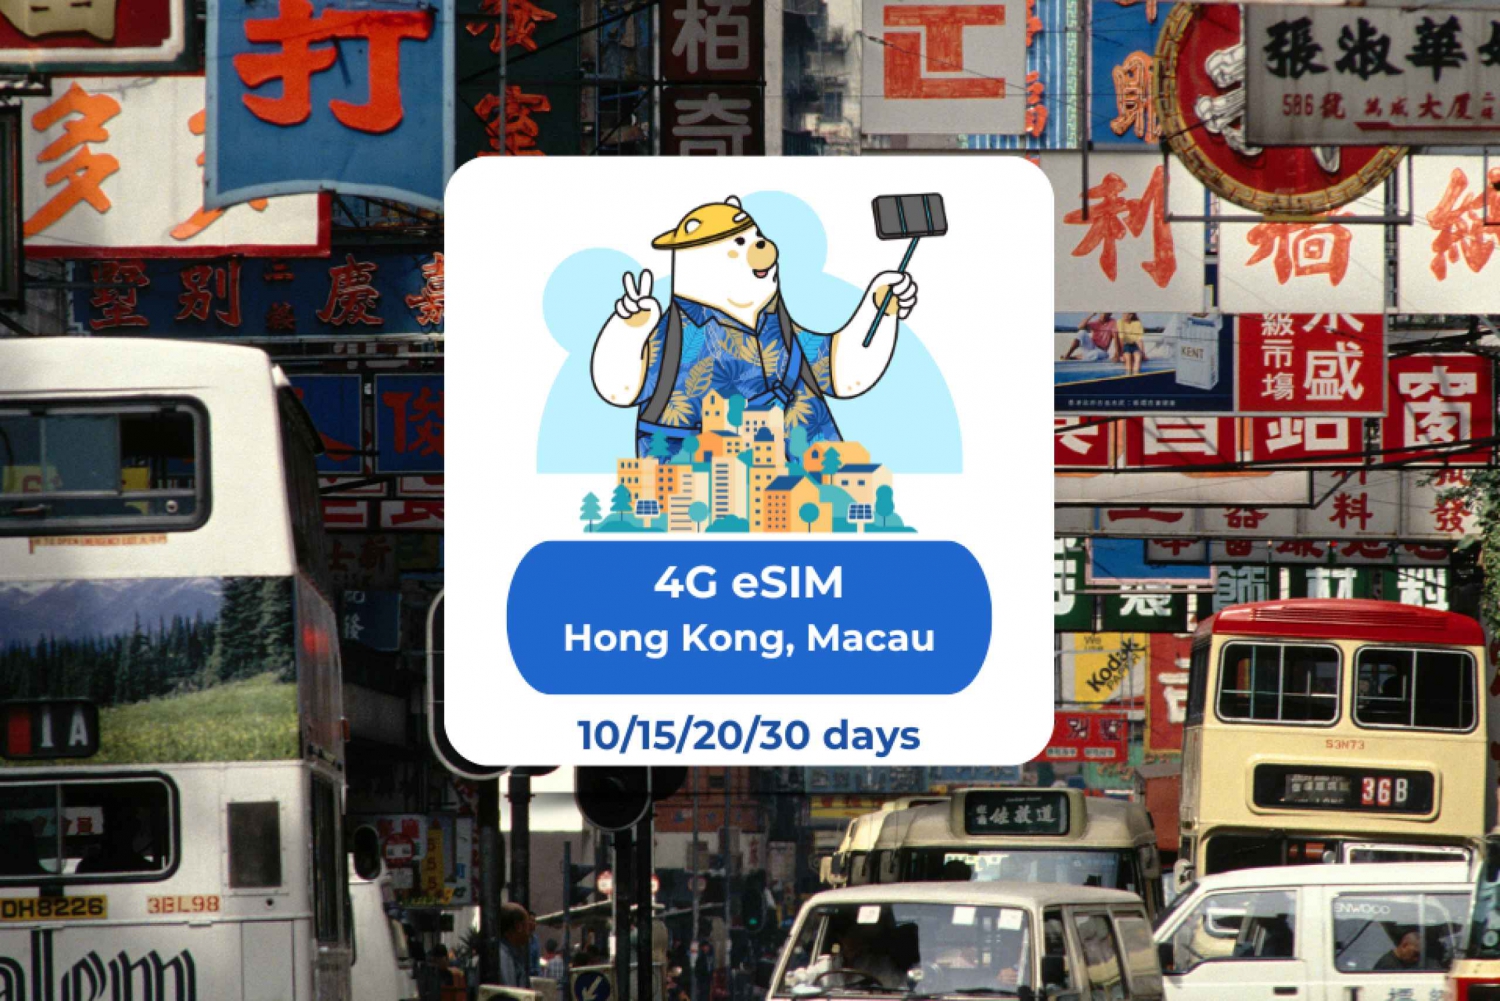 Hong Kong - Macau: Esim Data Packages for 10/15/20/30 days